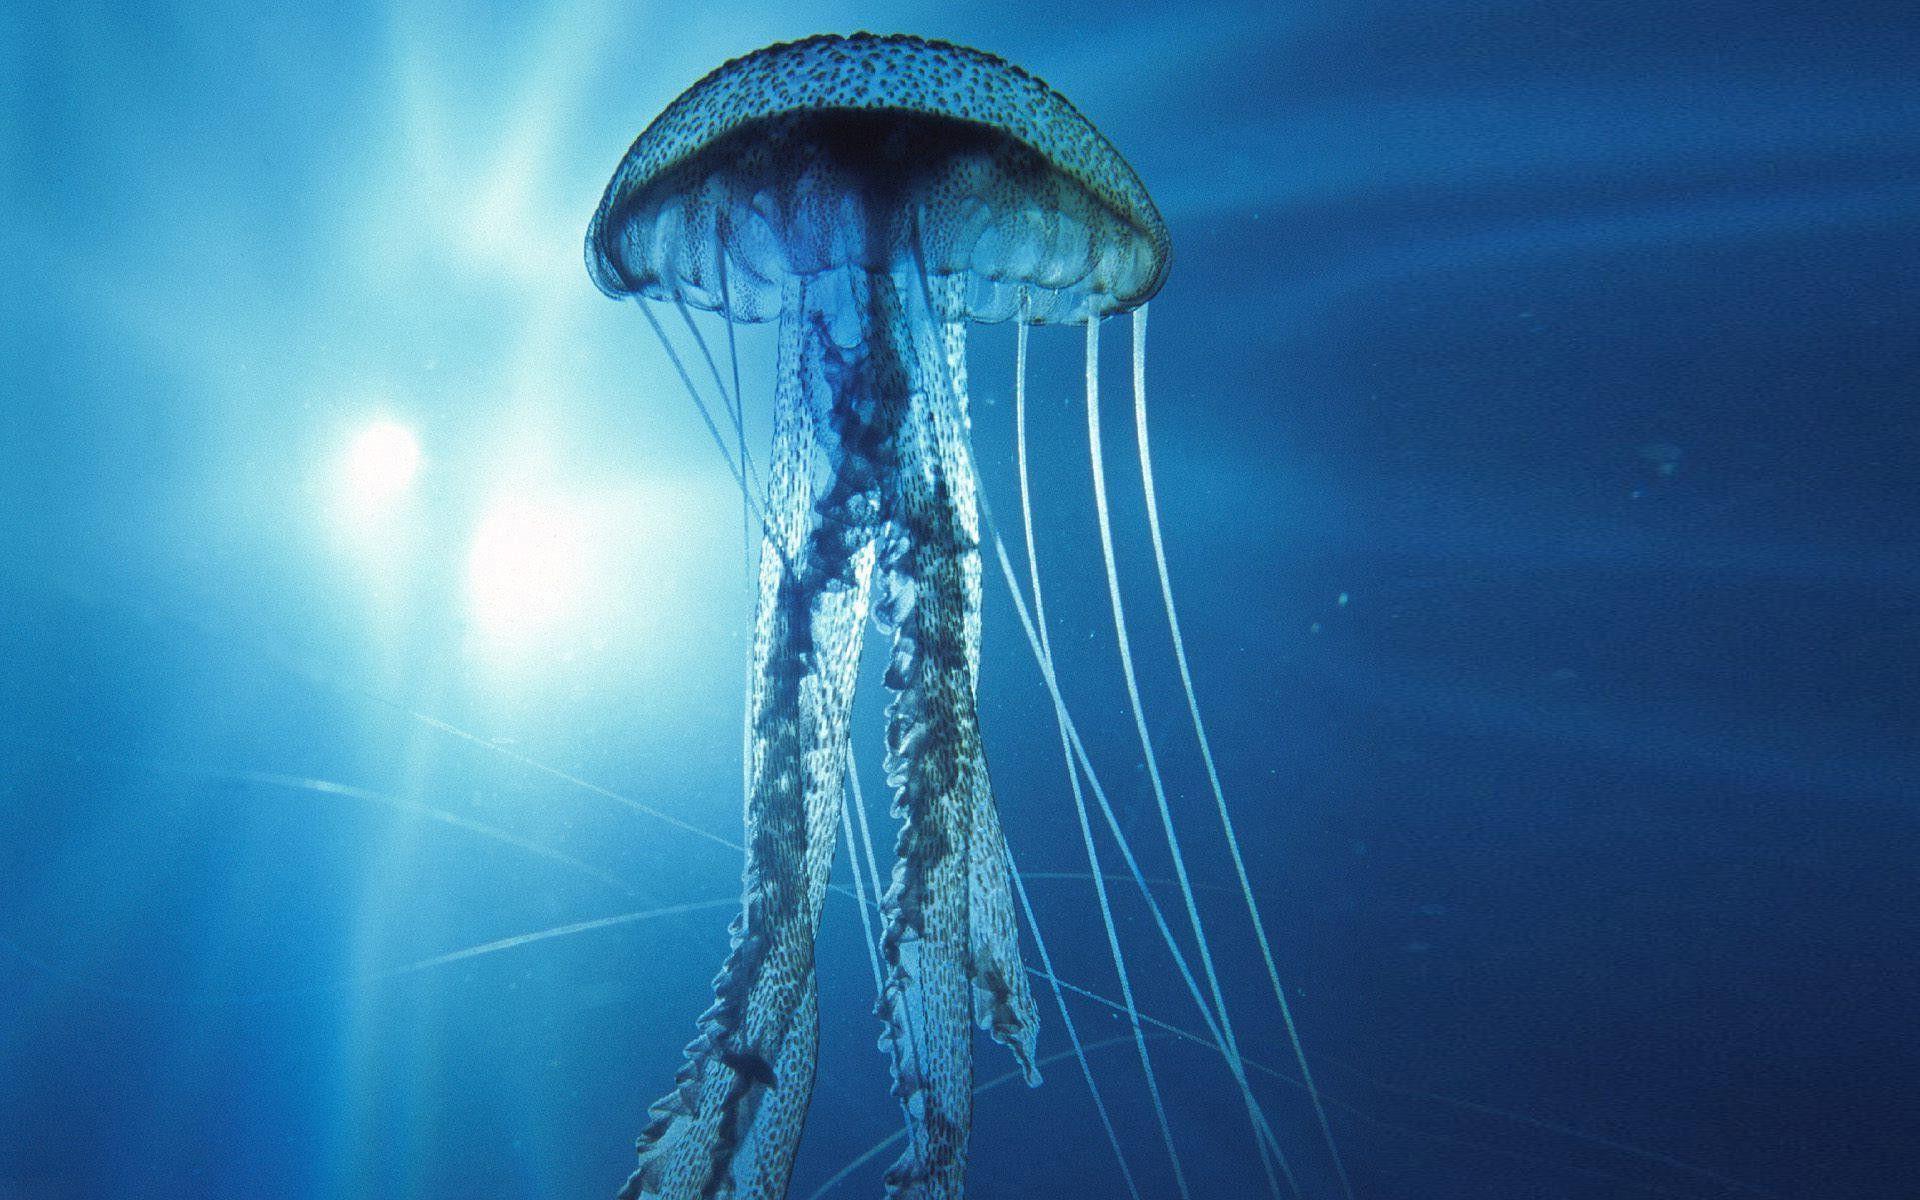 Box Jellyfish Wallpaper Image & Picture